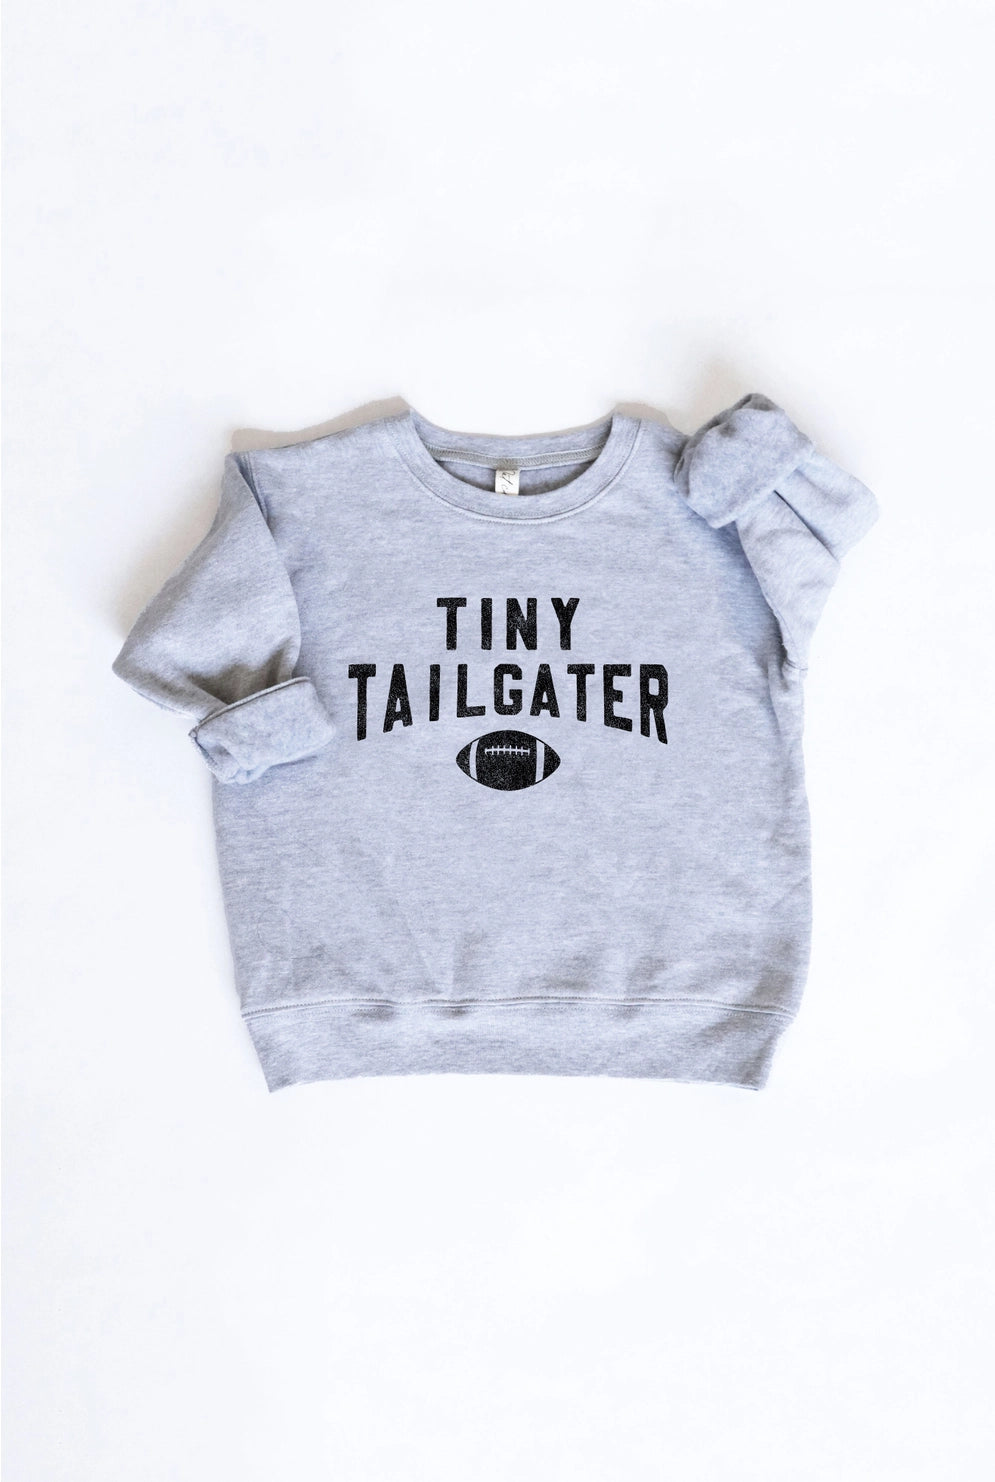 Tiny Tailgater Sweatshirt